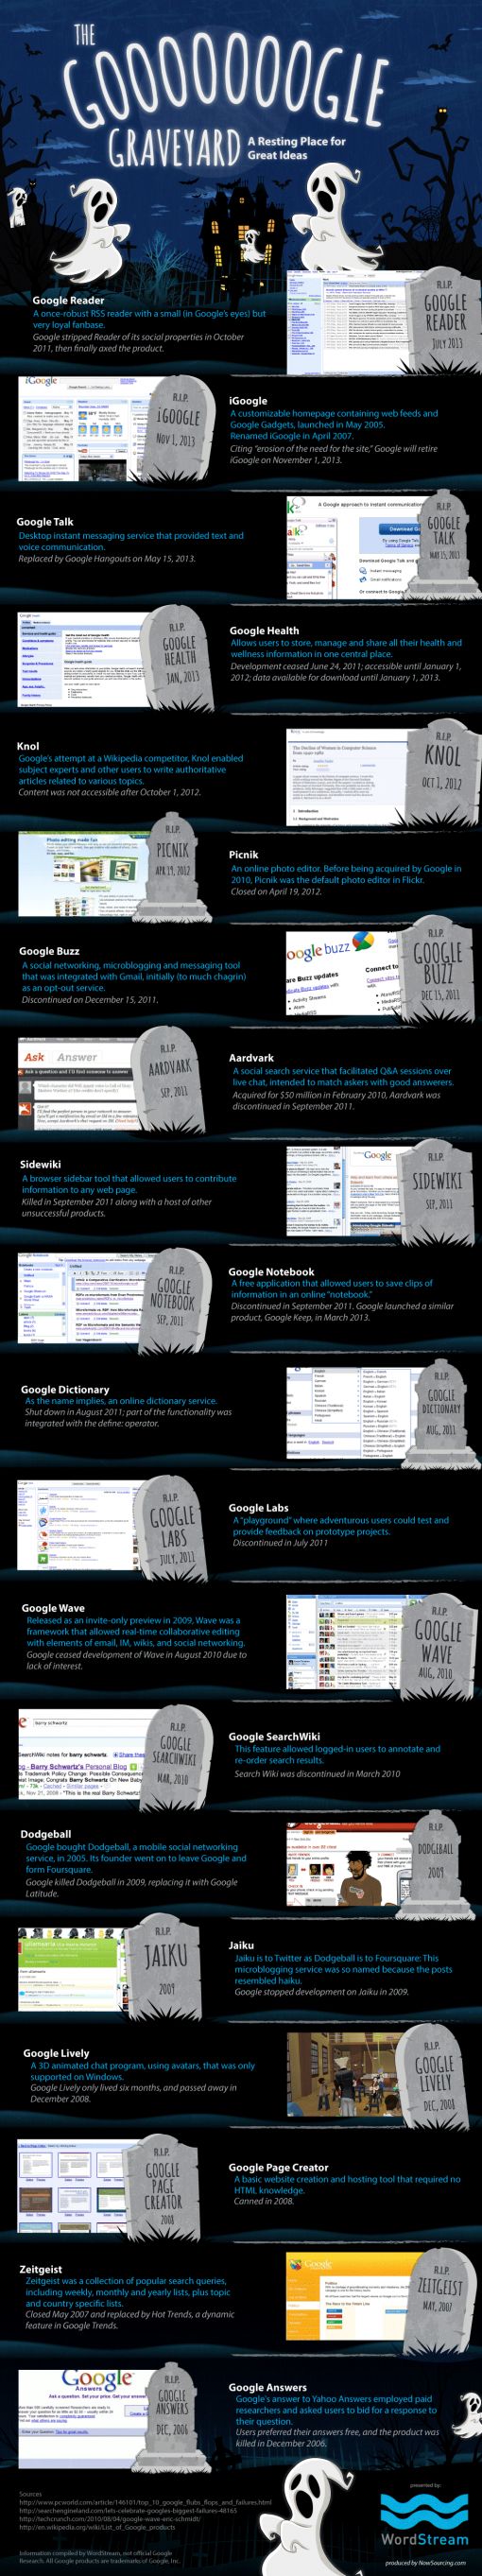 google-graveyard.jpg